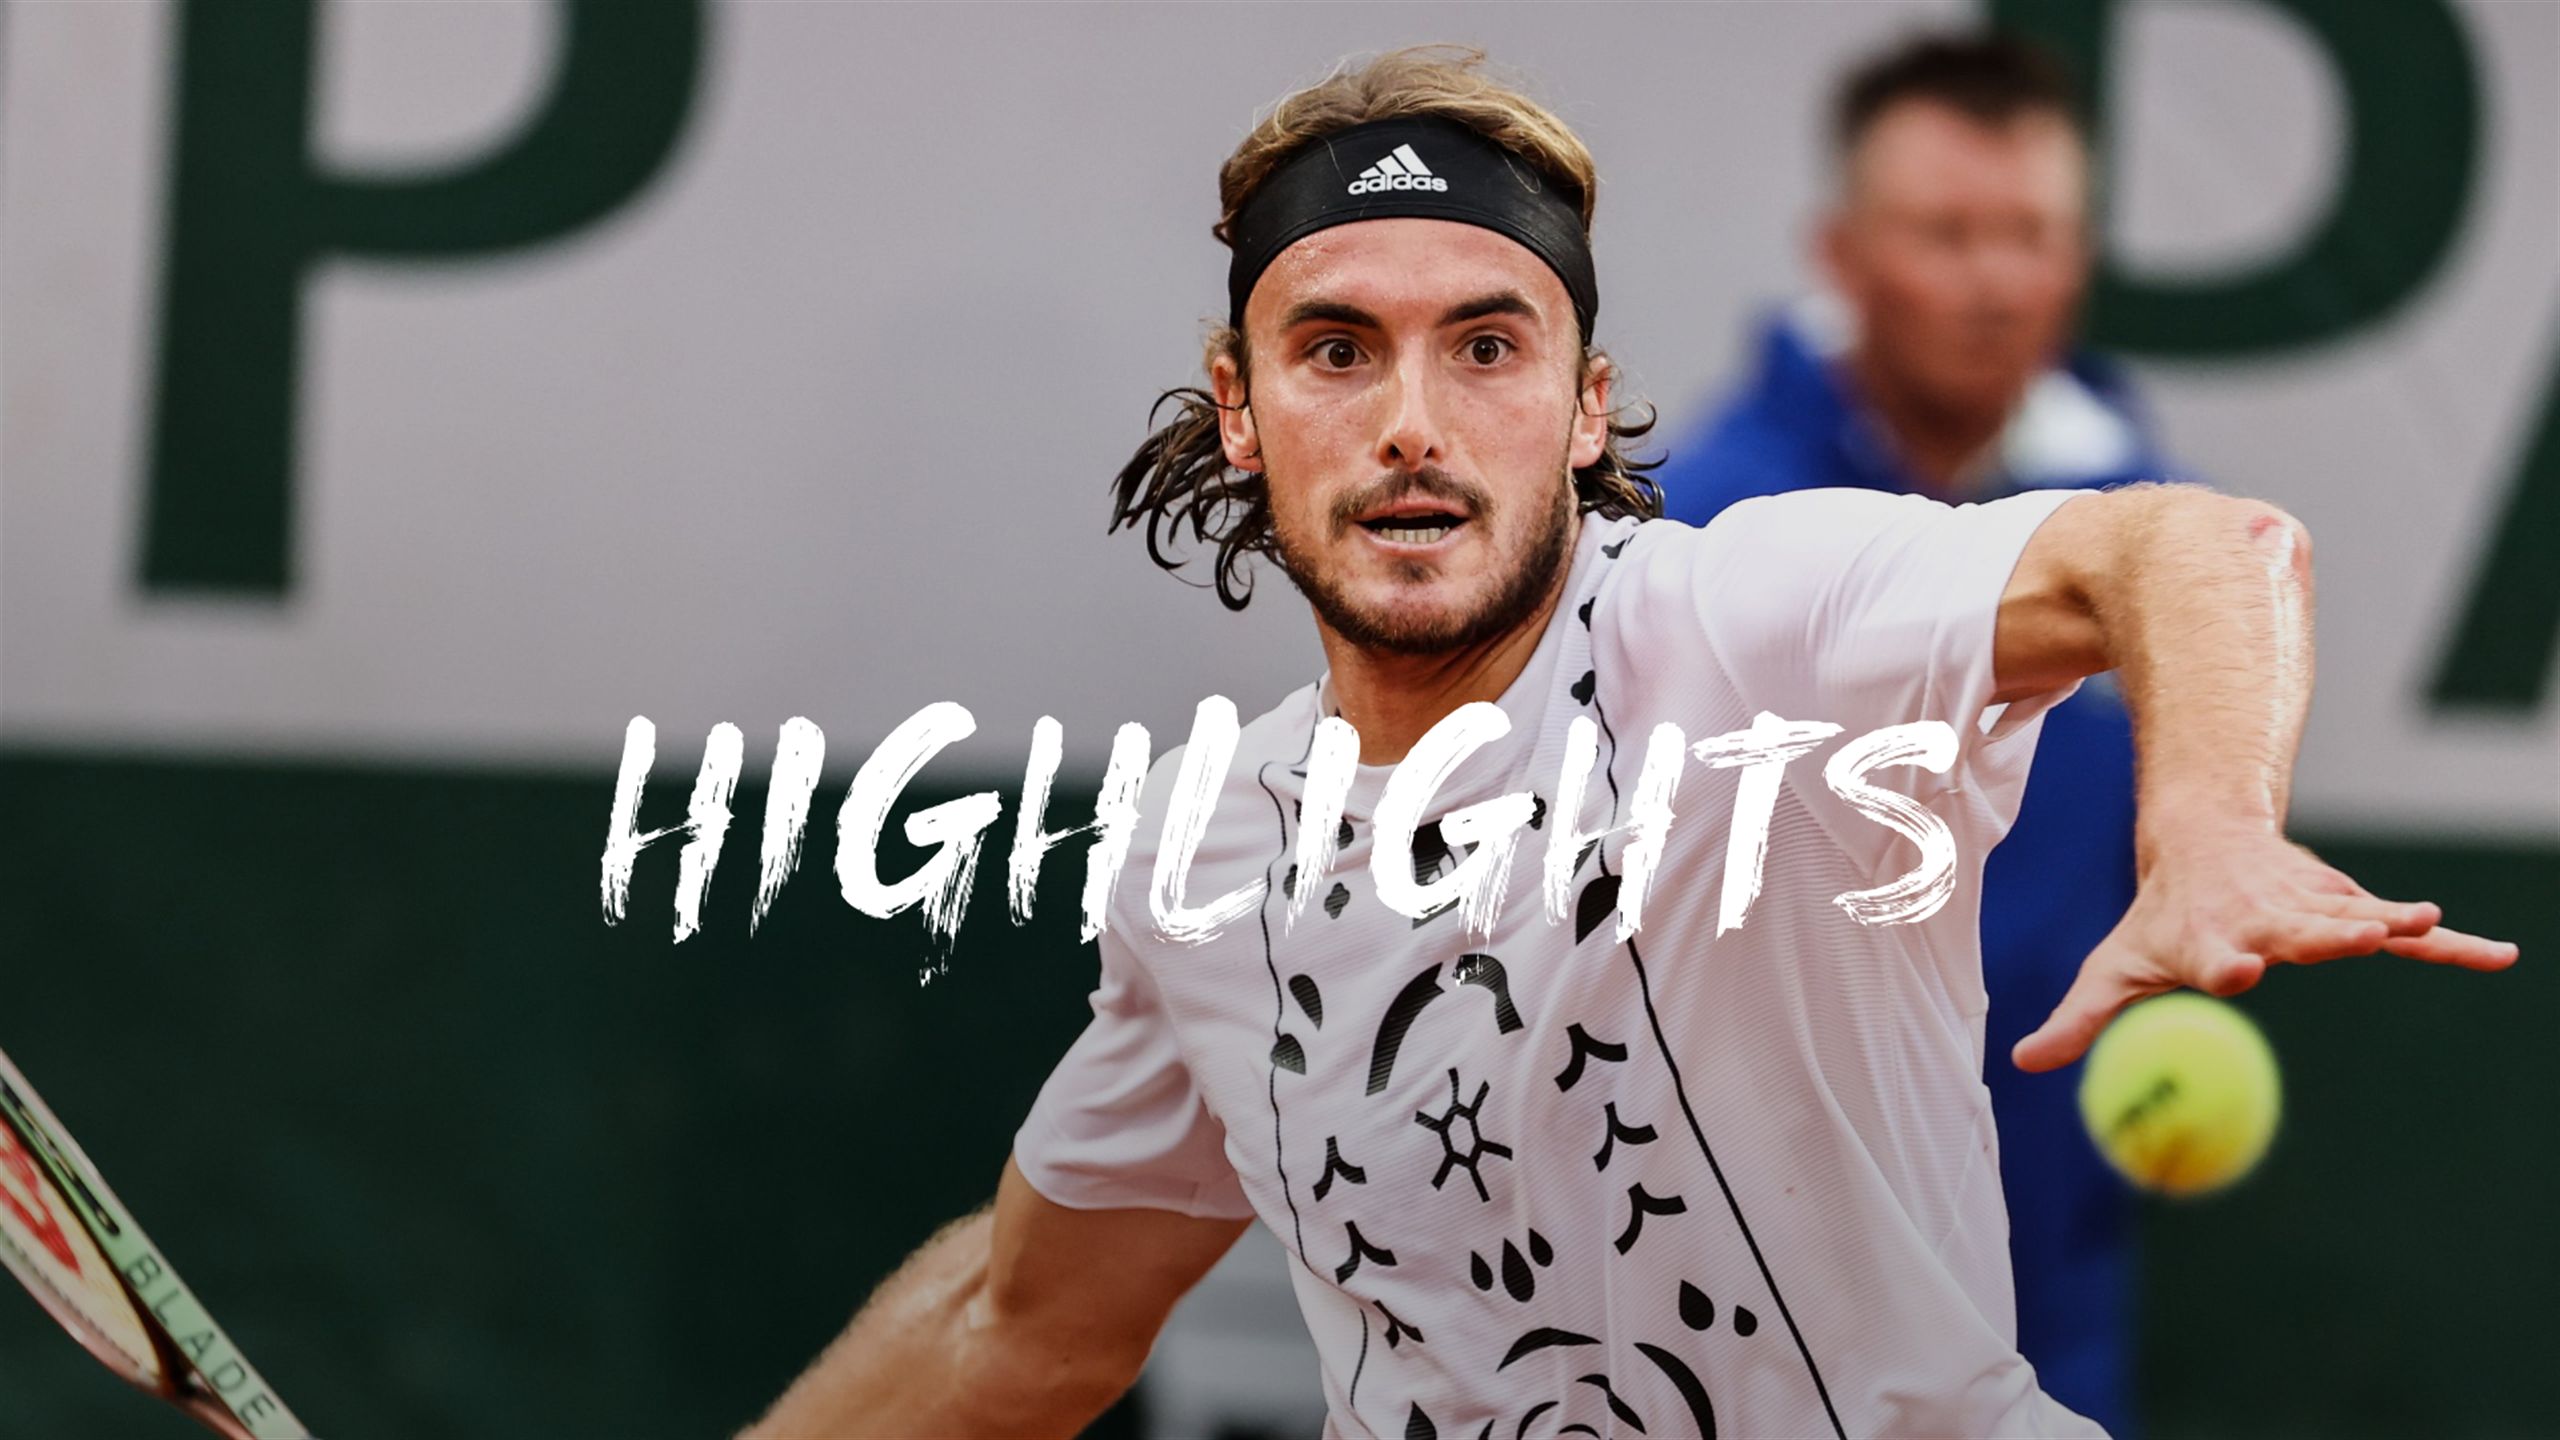 Highlights Stefanos Tsitsipas survives tough teat to overcome spirited Zdenek Kolar - Tennis video